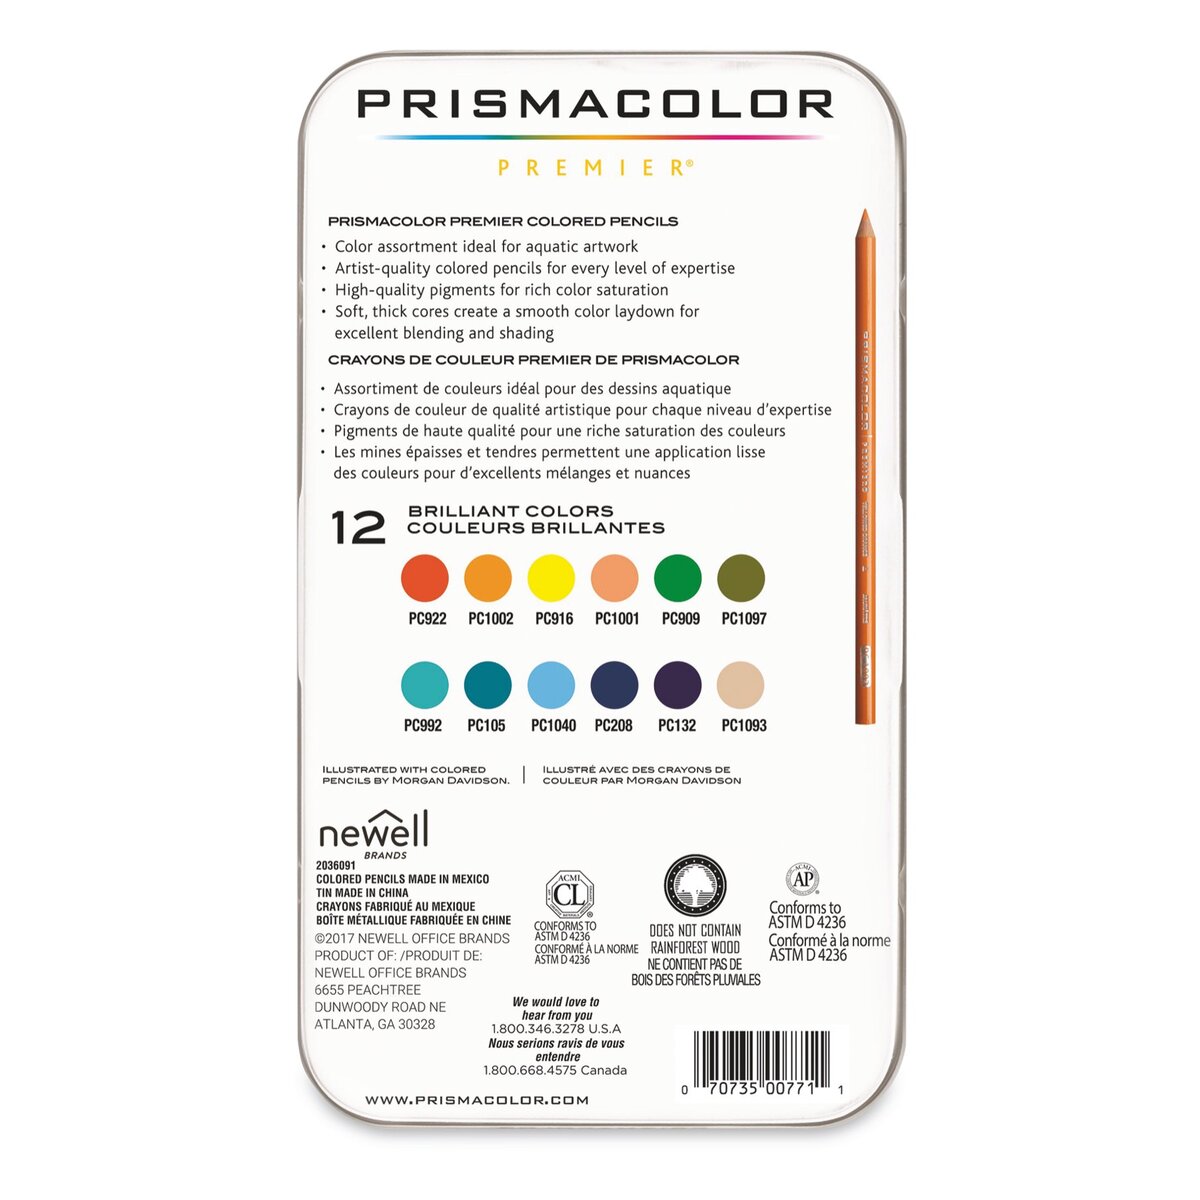 Prismacolor Premier Colored Pencils - Under the Sea Set - Artist &  Craftsman Supply